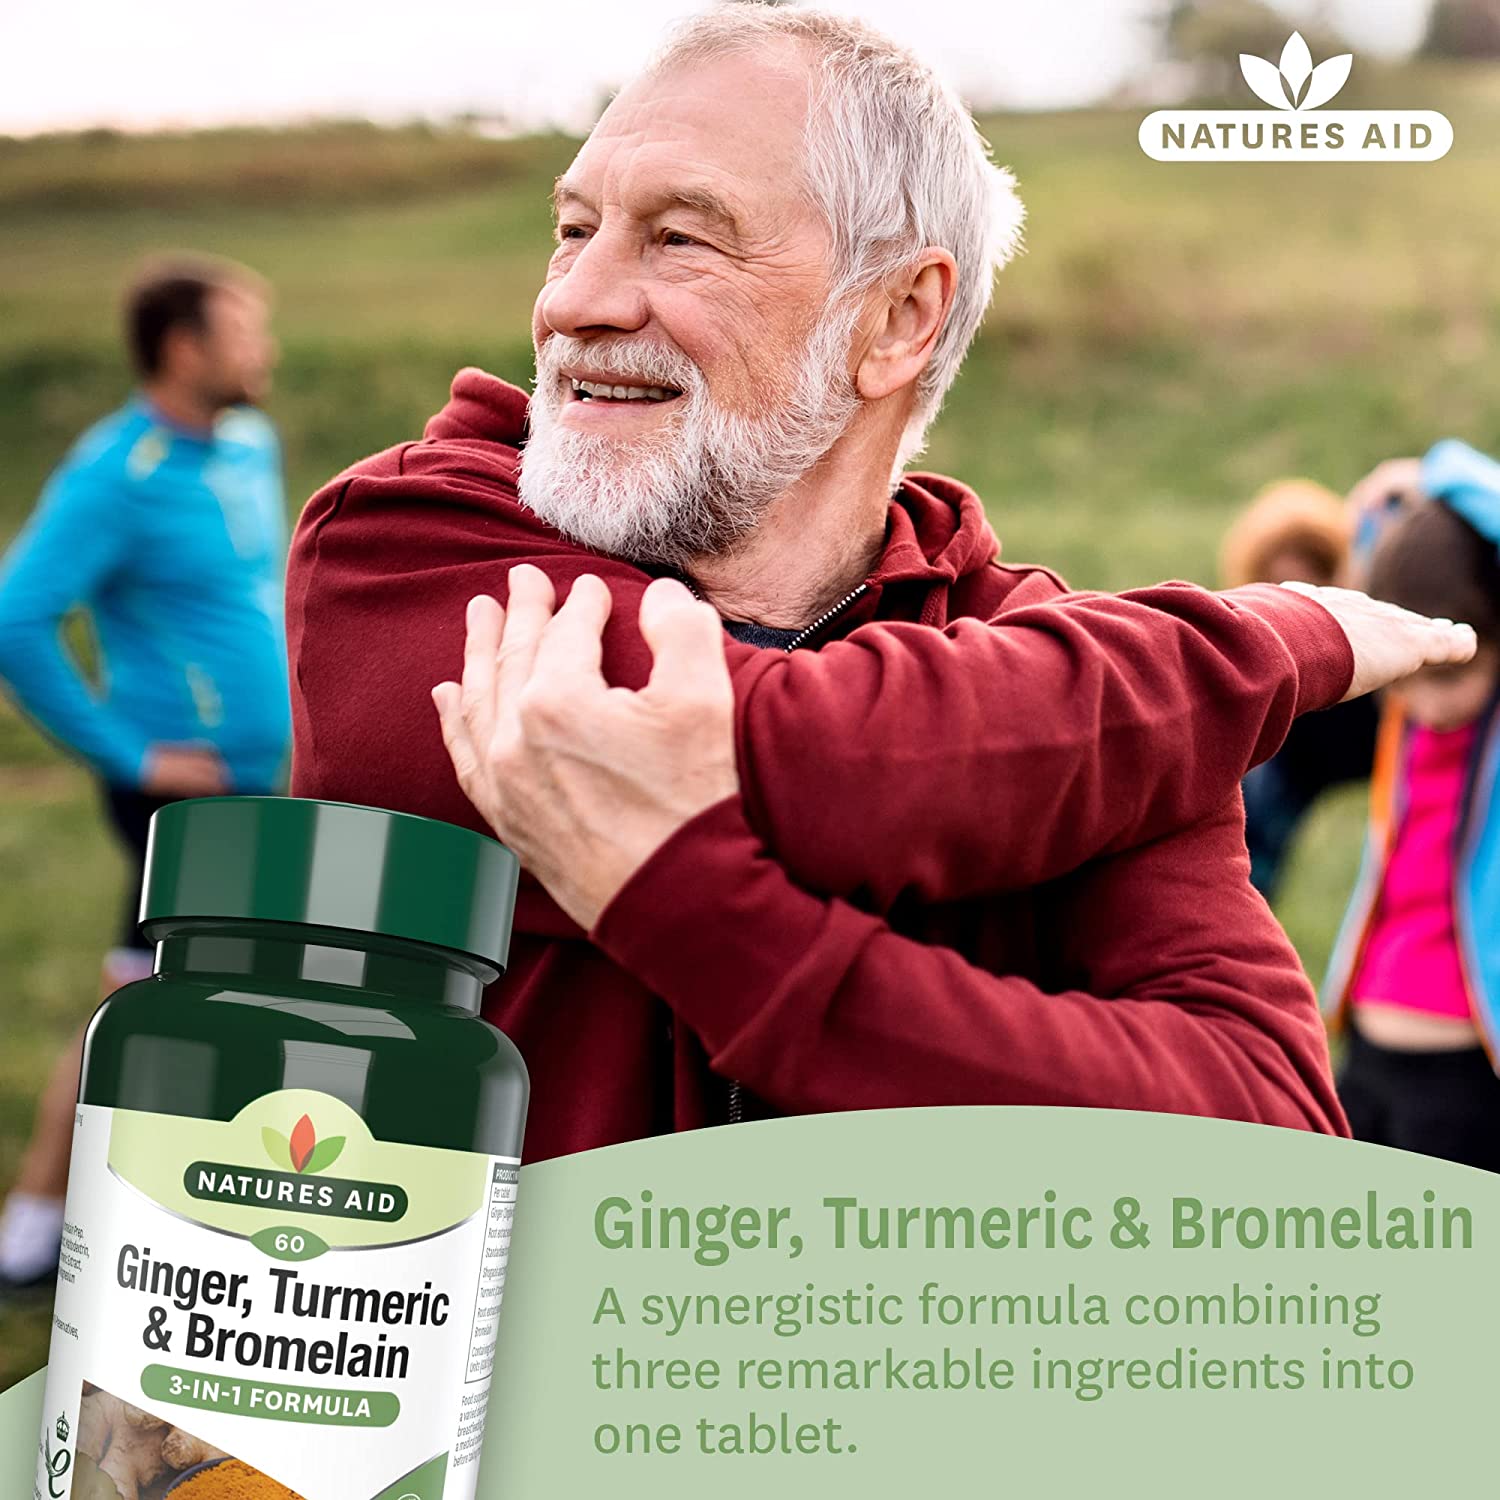 Ginger, Turmeric & Bromelain 3-in-1 Botanical Formula 60 Tablets